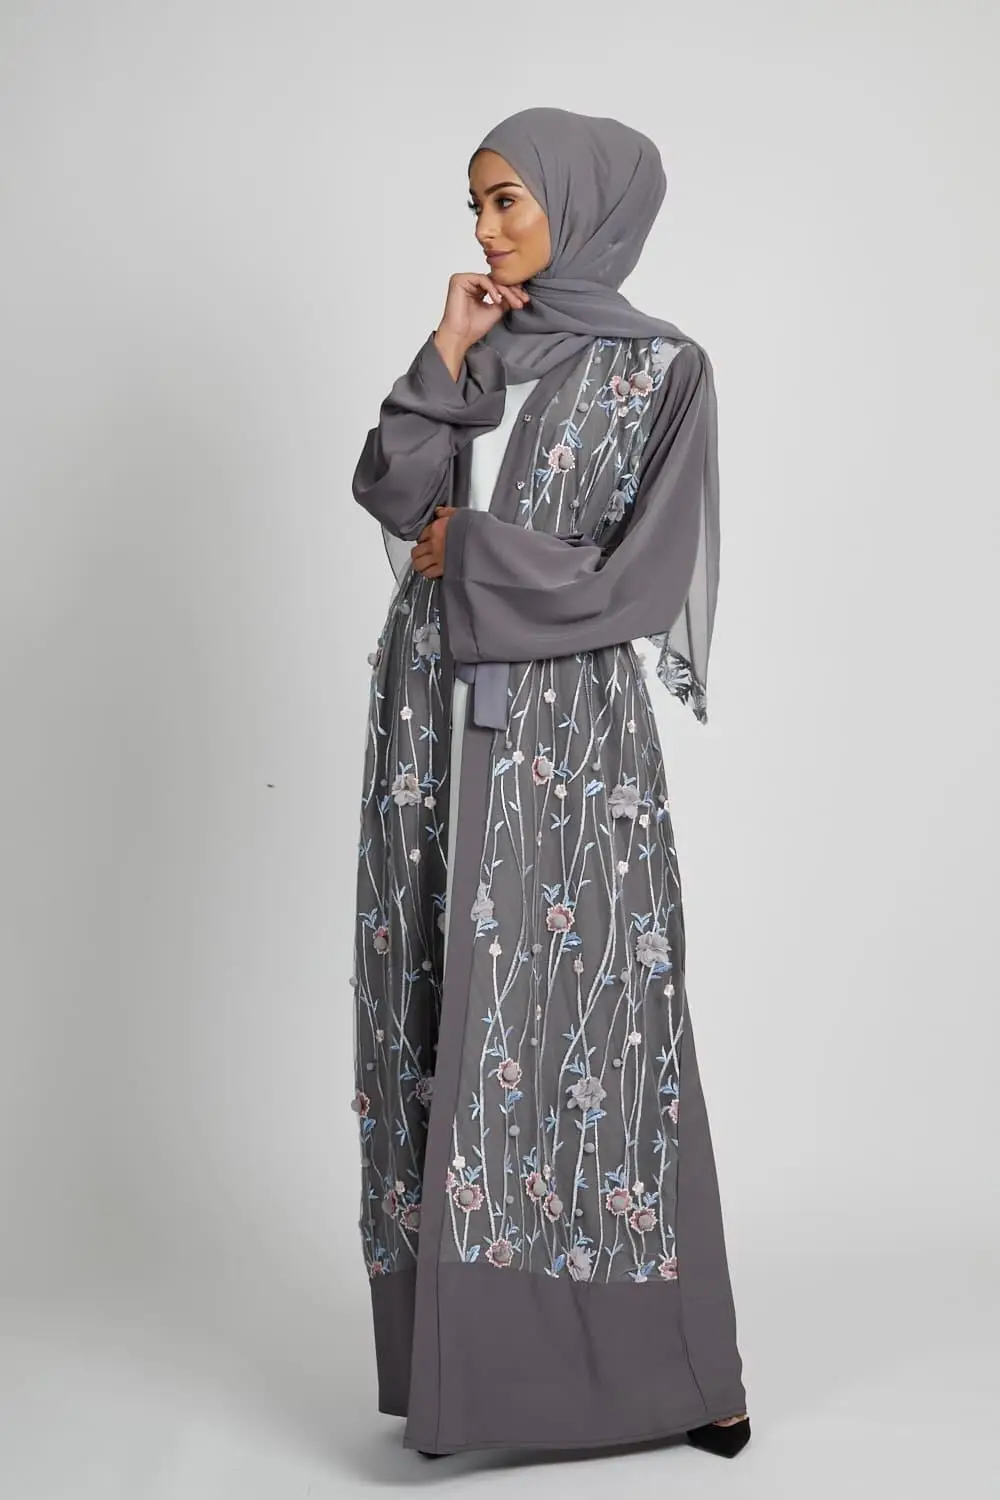 Вышитая искусственная мусульманская кафтан, длинное платье на шнуровке с аппликацией, Дубай, джилбаб, хиджаб, халат, кафтан, Рамадан, абайя